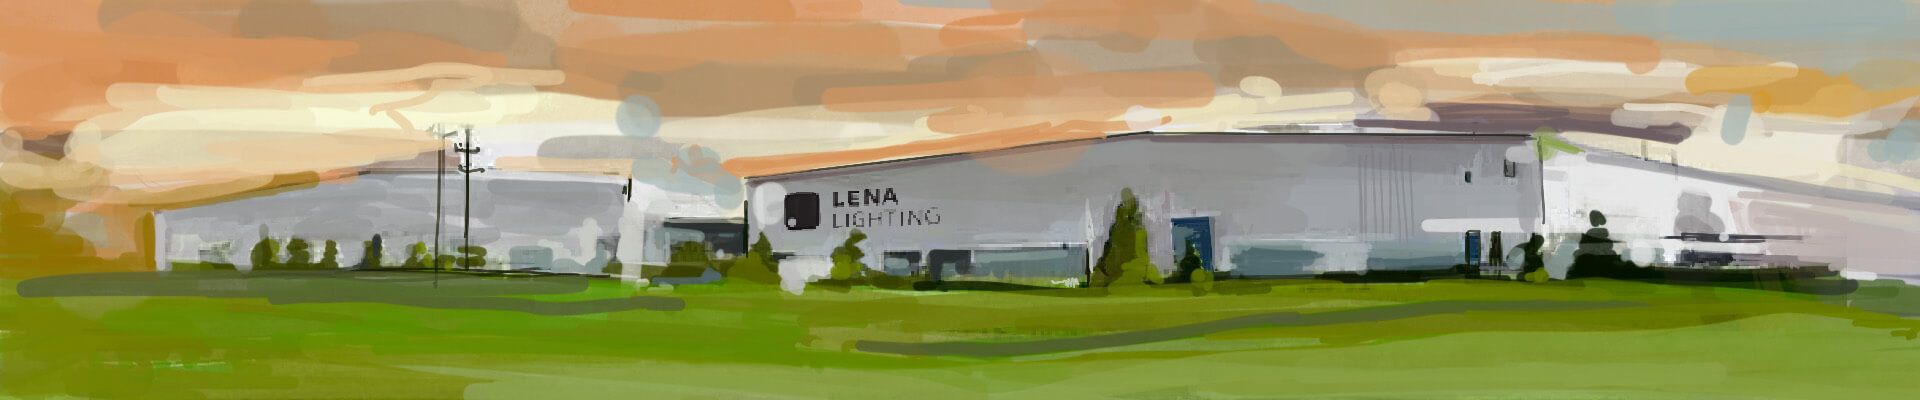 Lena Lighting- fabryka i magazyn 